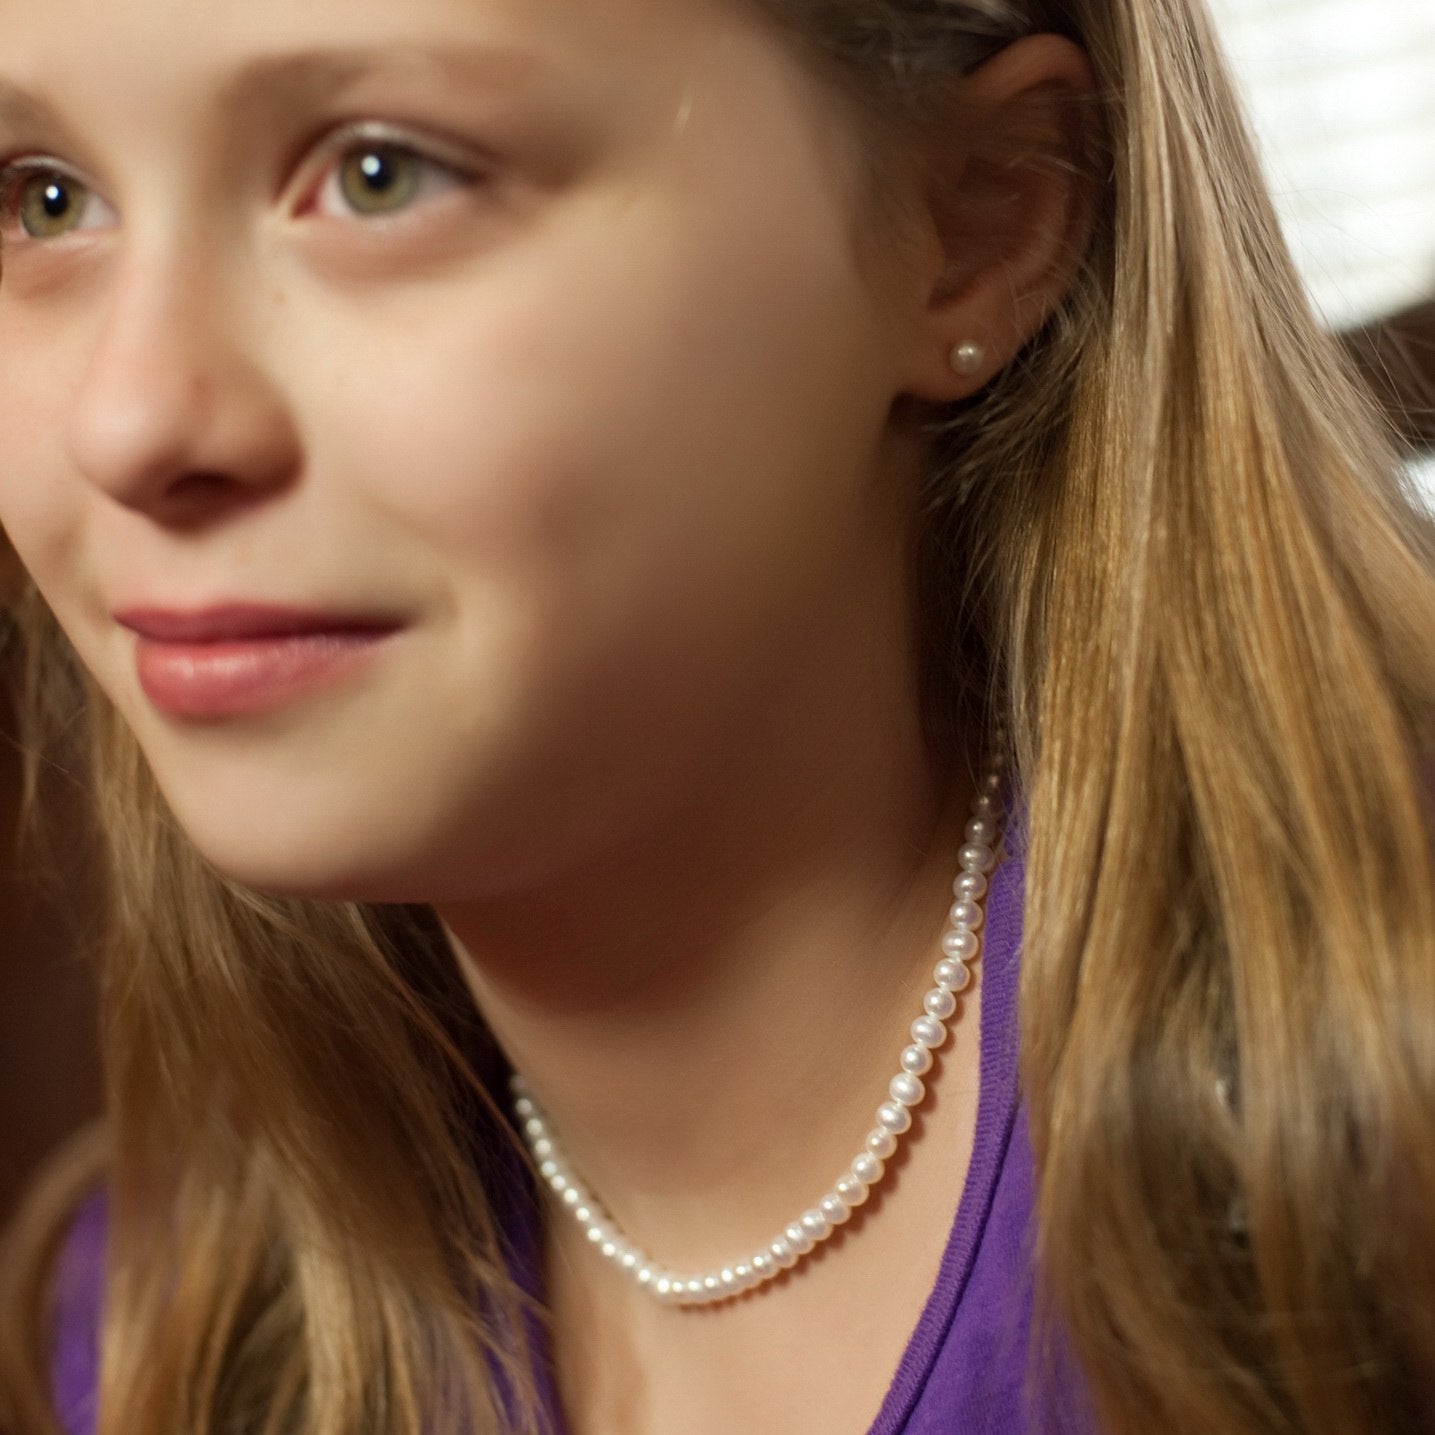 Children's Pearl Necklaces & Heirloom Jewelry  Little Girls Pearls – Page  2 – Little Girl's Pearls